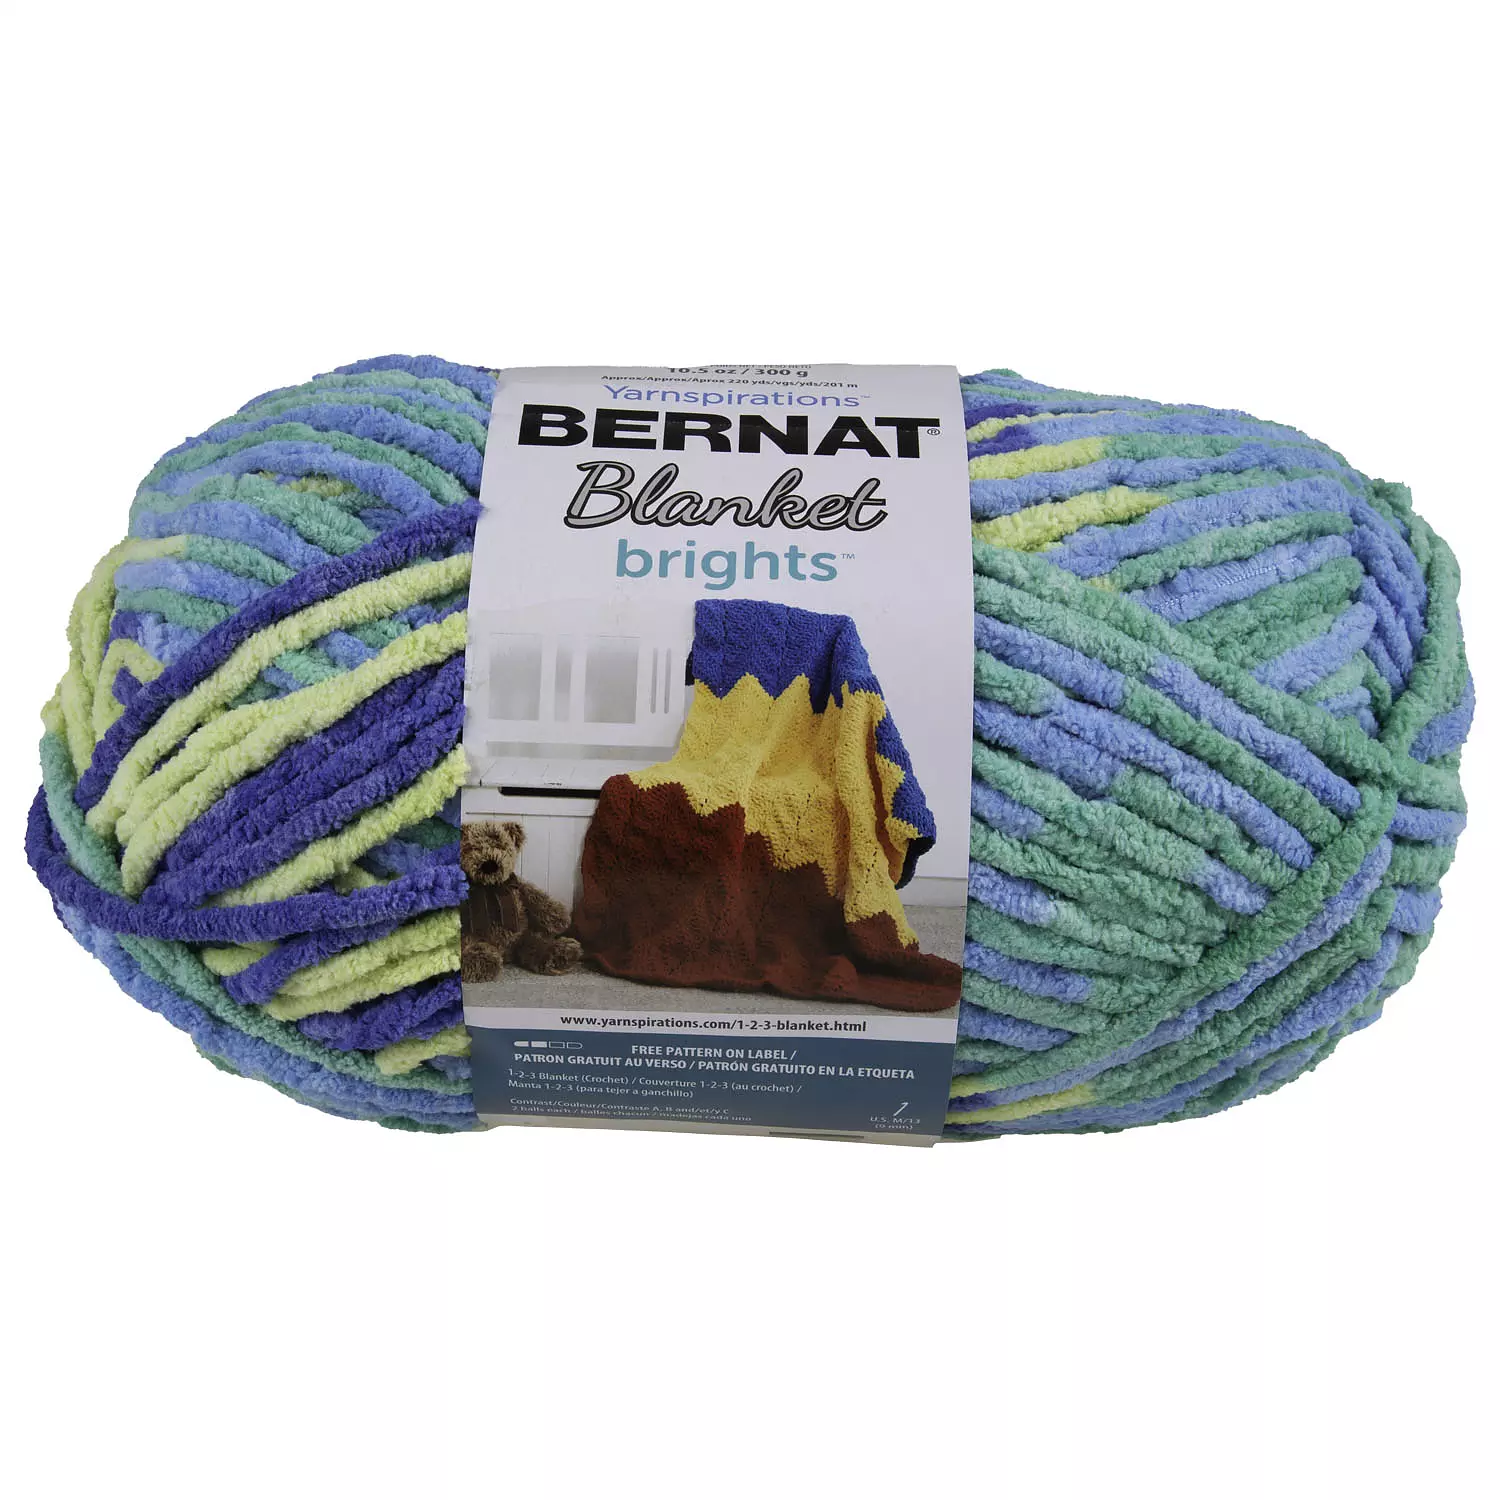 Bernat Blanket Brights - Yarn, surf varg. Colour: blue